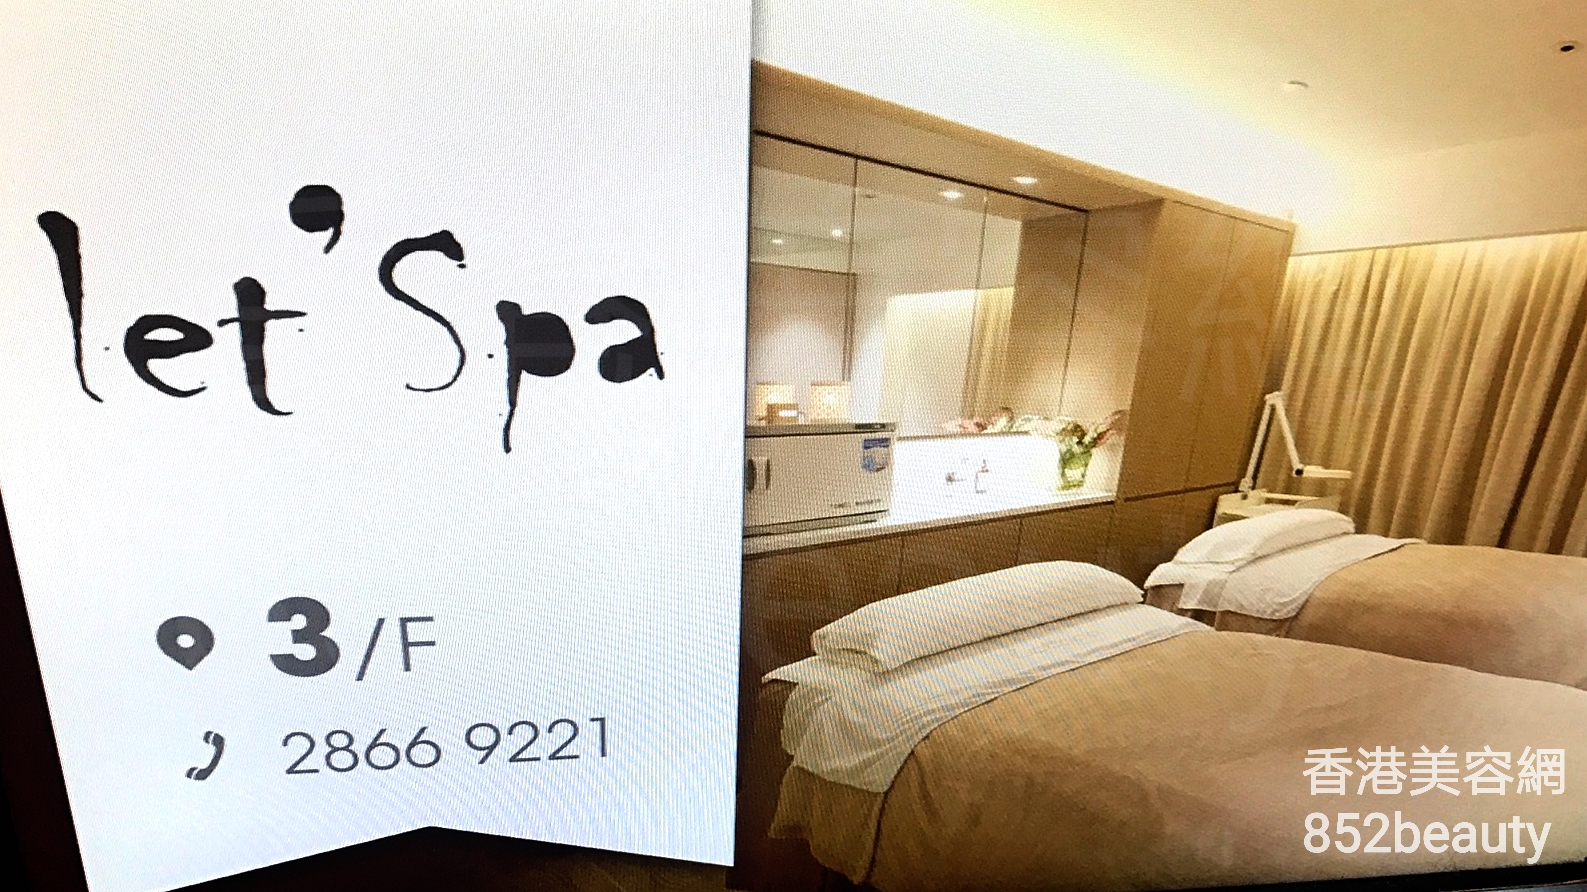 Massage/SPA: Let'spa (灣仔店)